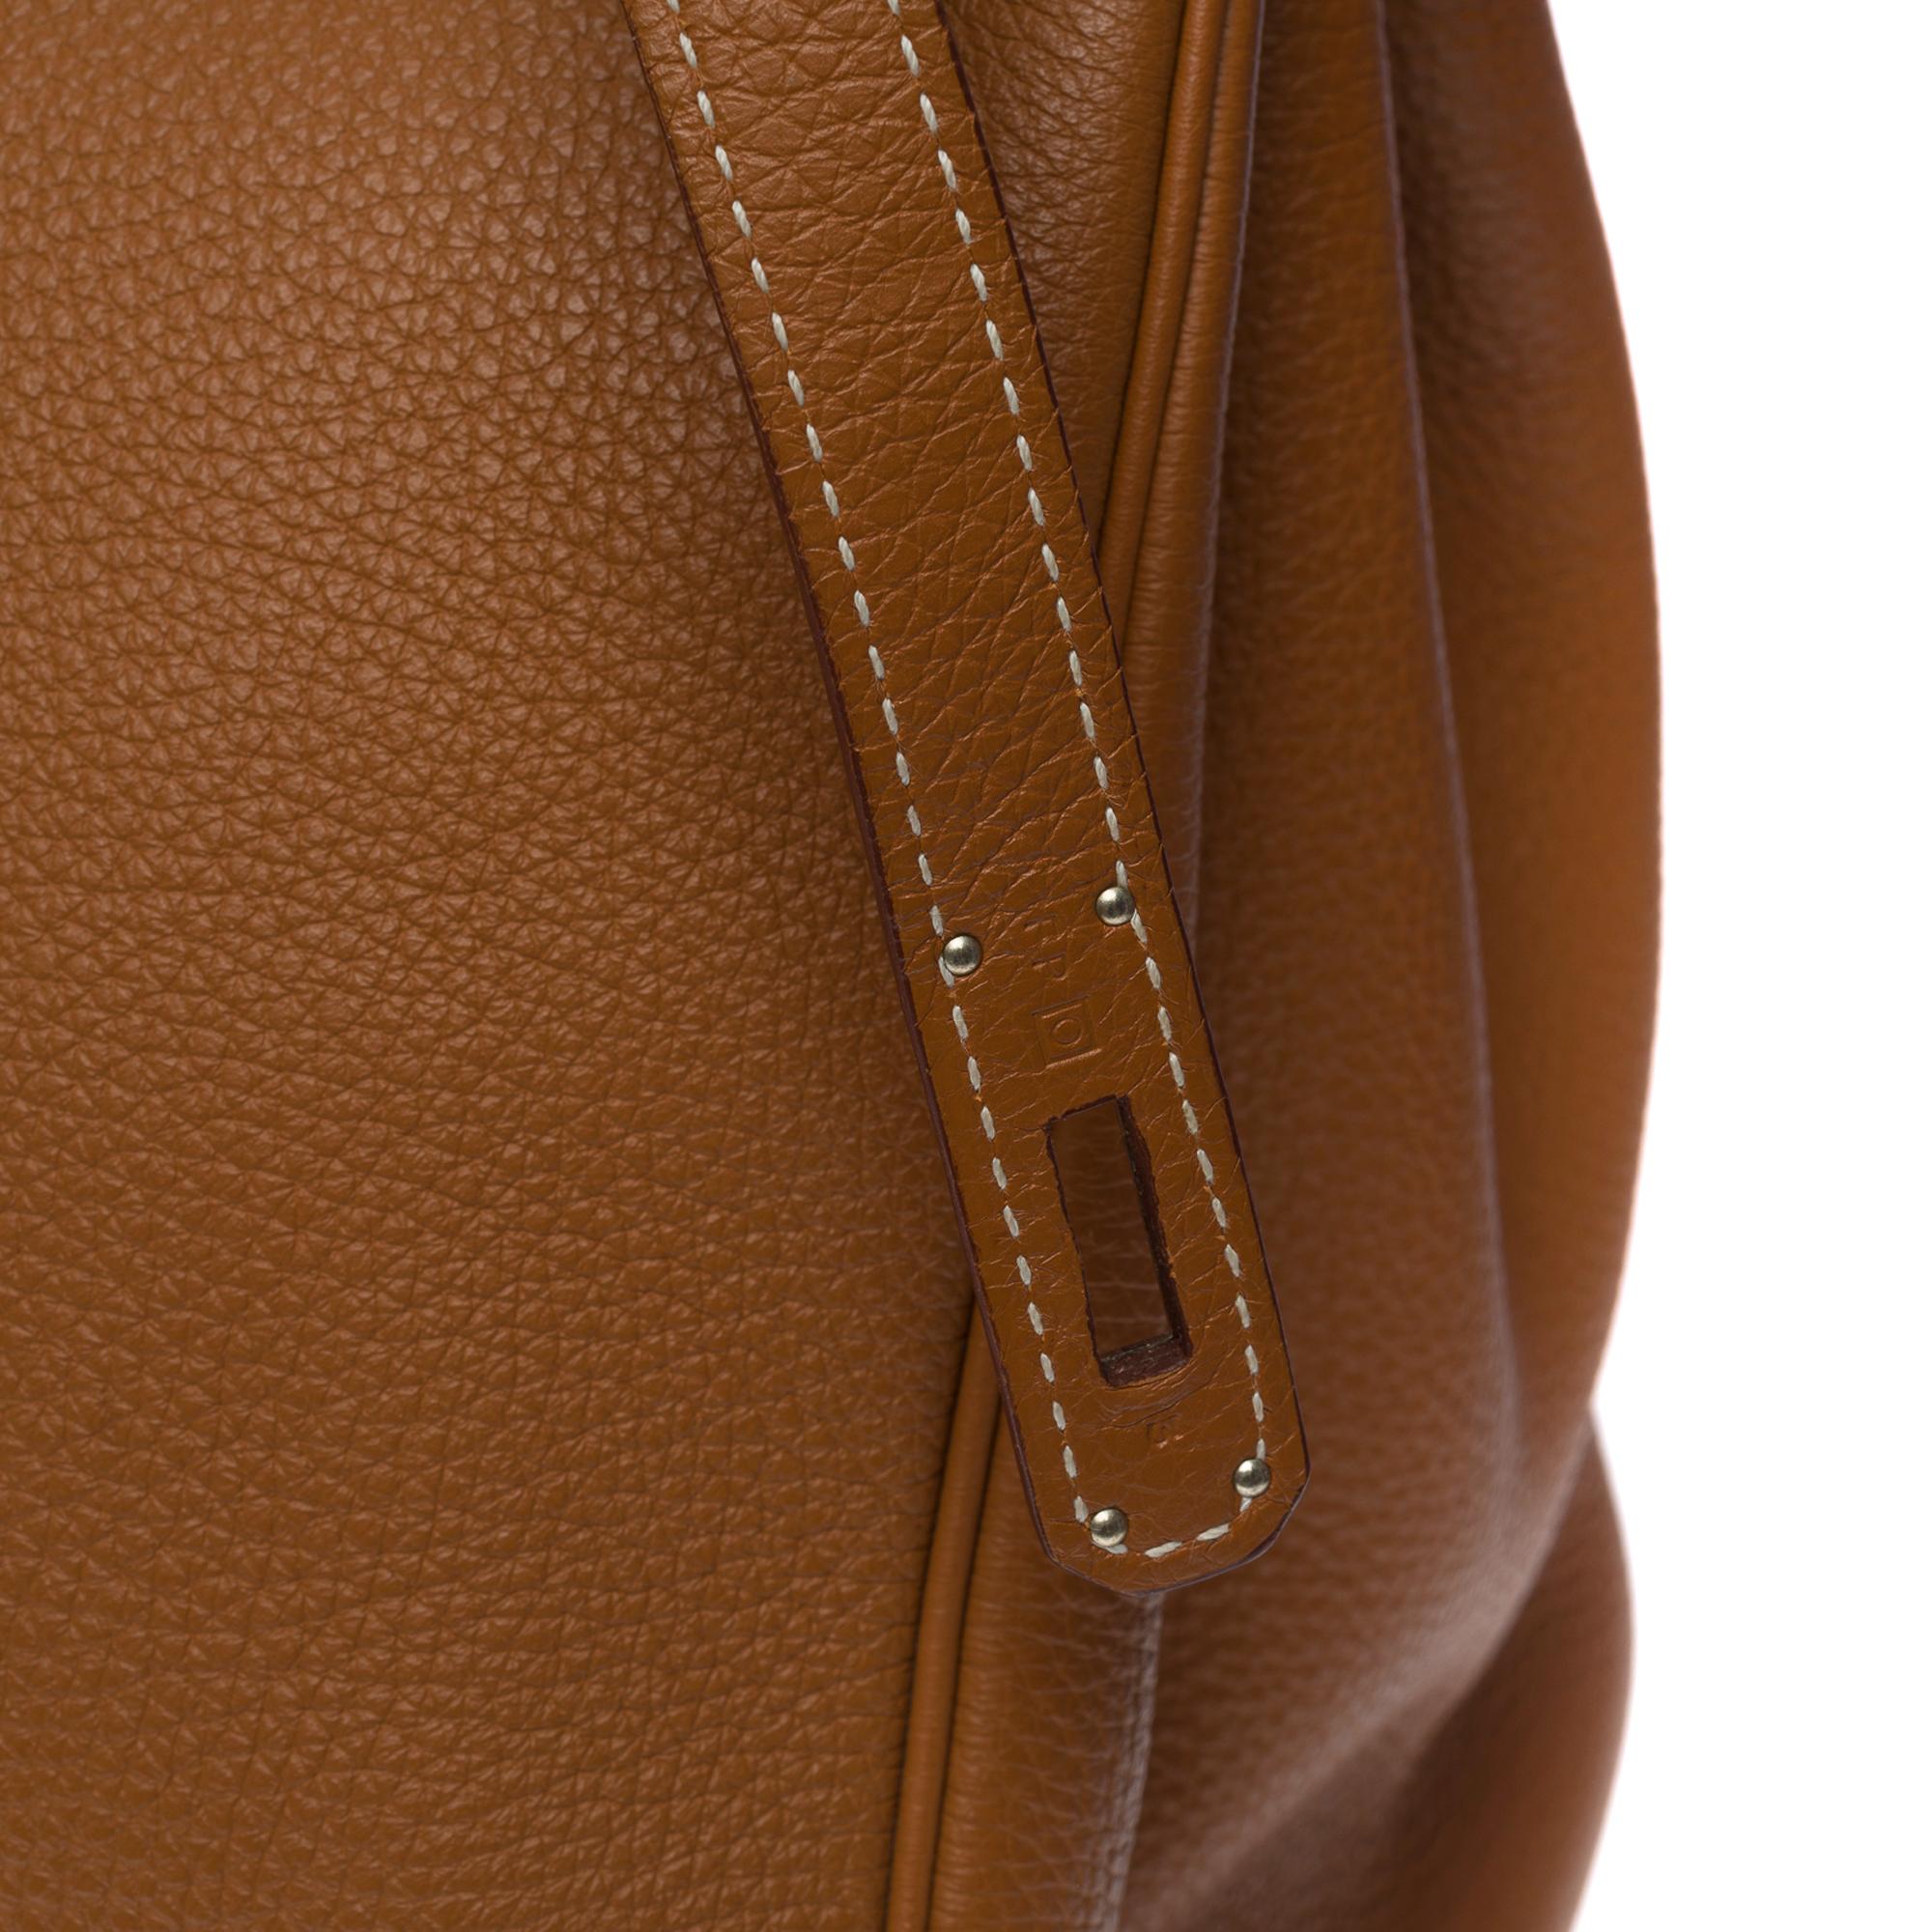 Women's or Men's Stunning Hermes Birkin 40cm handbag in Camel Togo leather, SHW